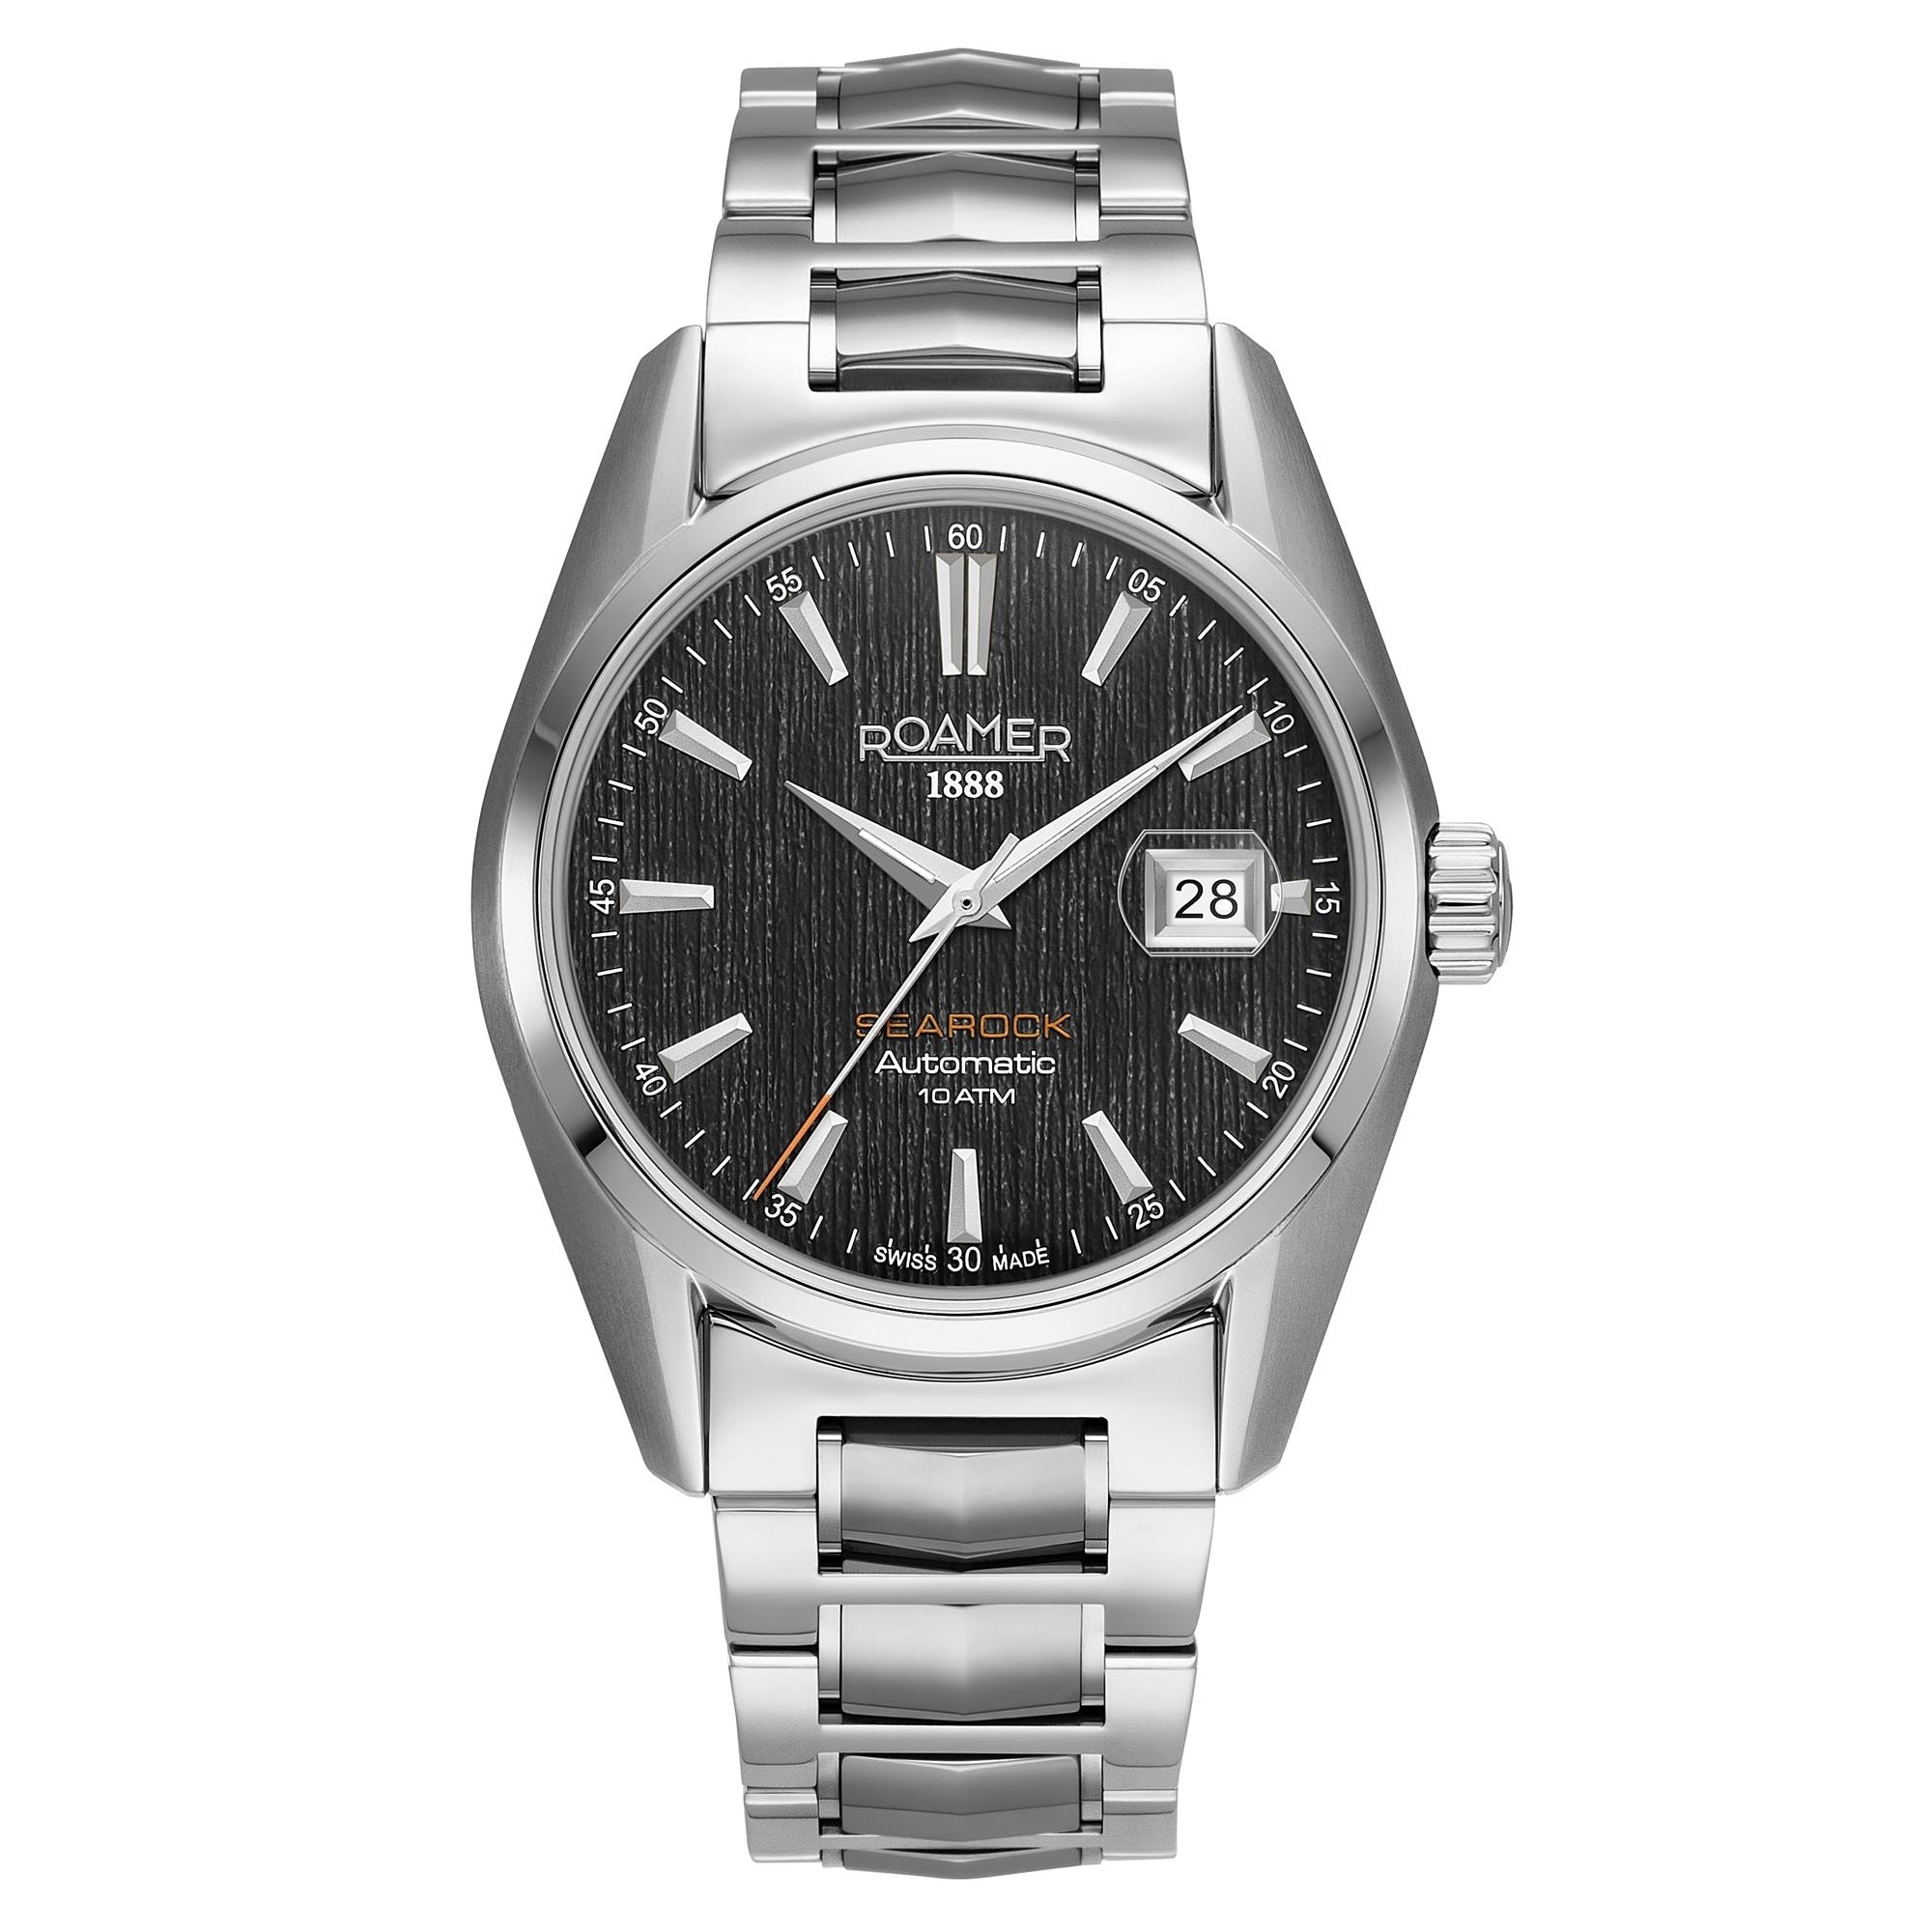 Photos - Wrist Watch Roamer 210665 41 55 20 Men's Searock Automatic Black Dial Wristwatch 